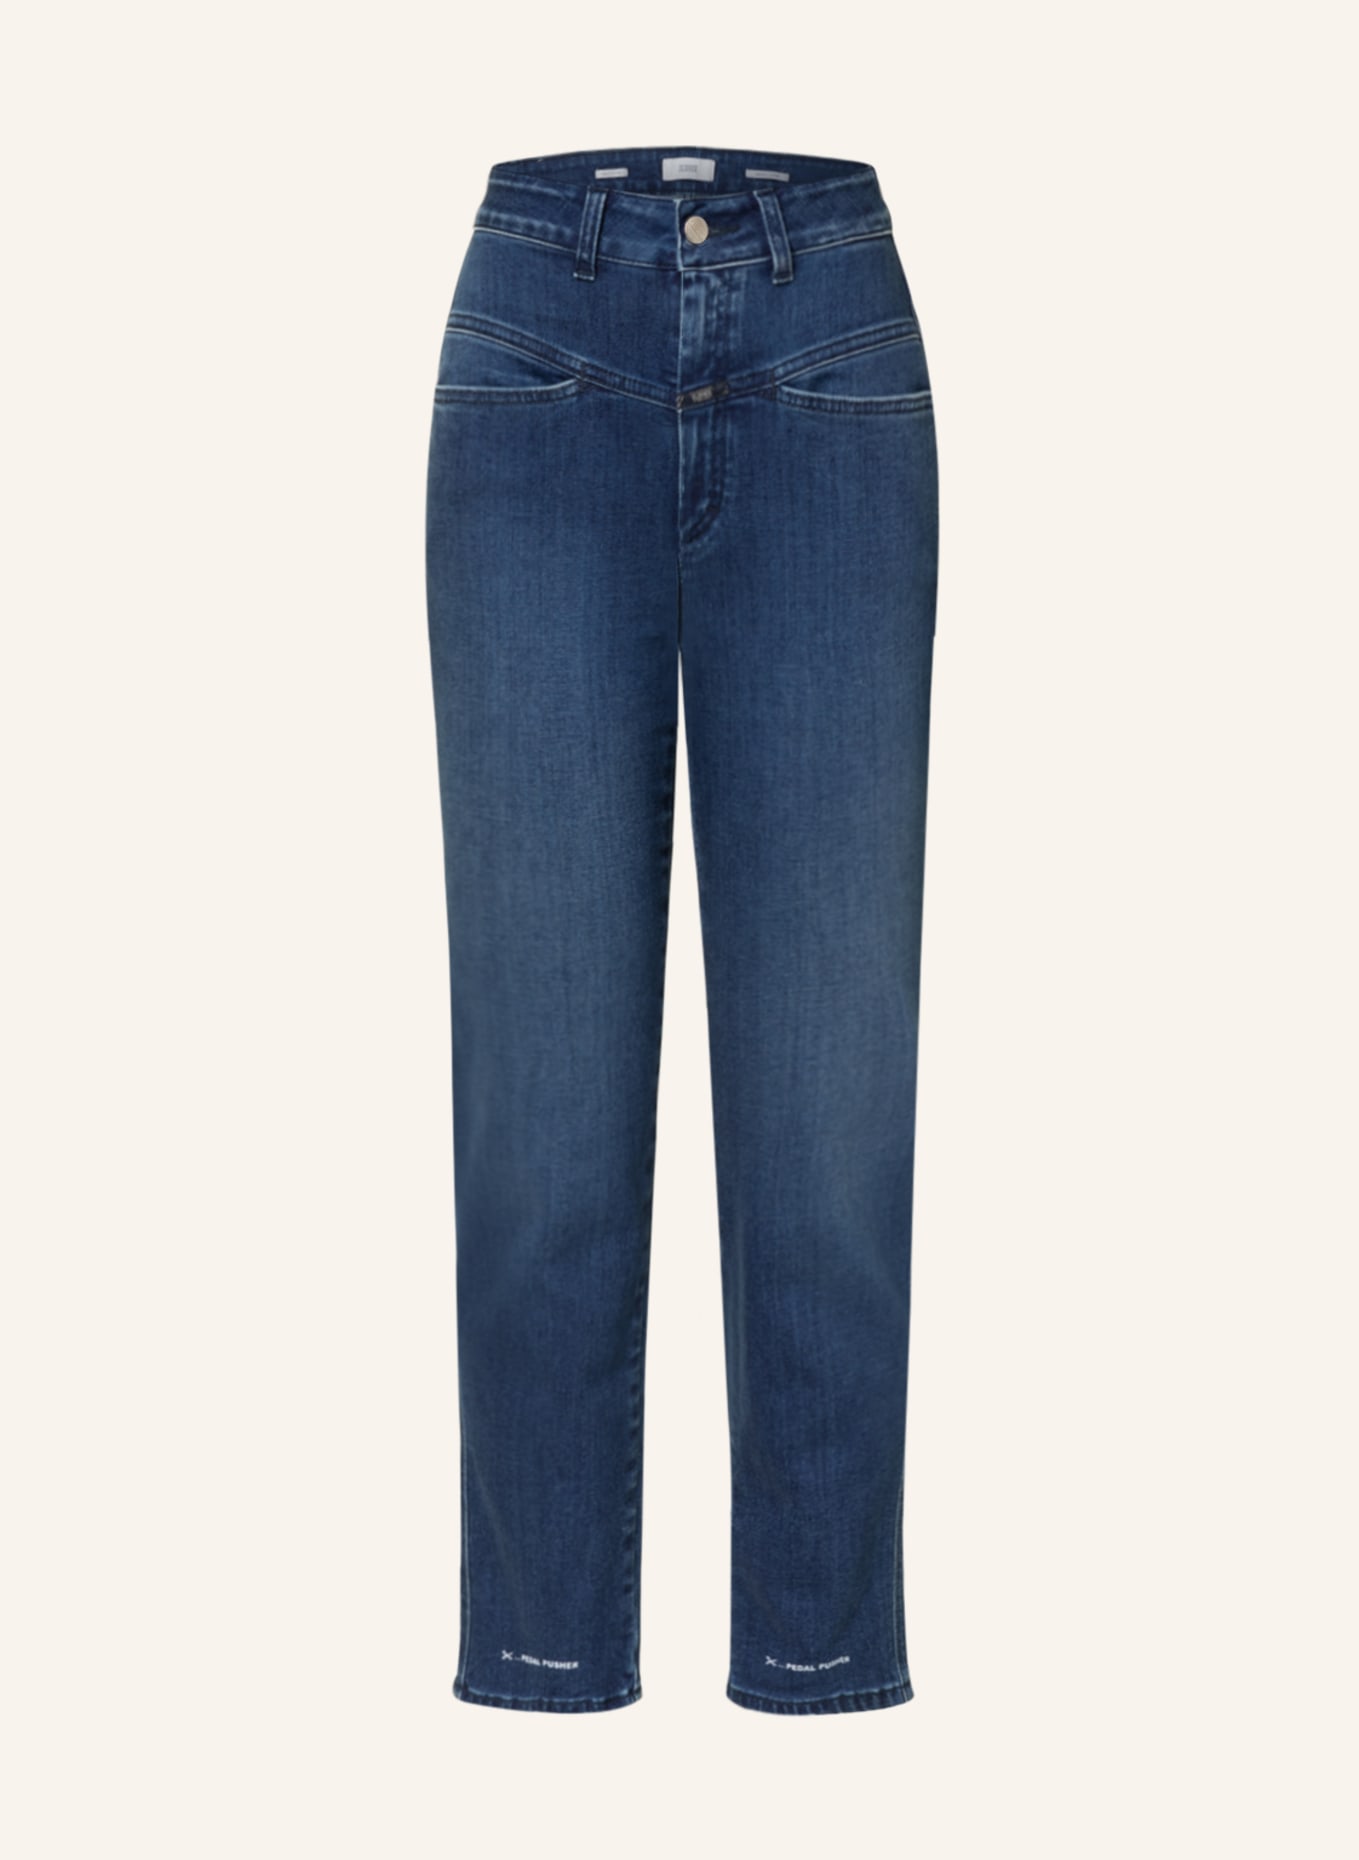 CLOSED Jeans PEDAL PUSHER, Farbe: DBL DARK BLUE (Bild 1)